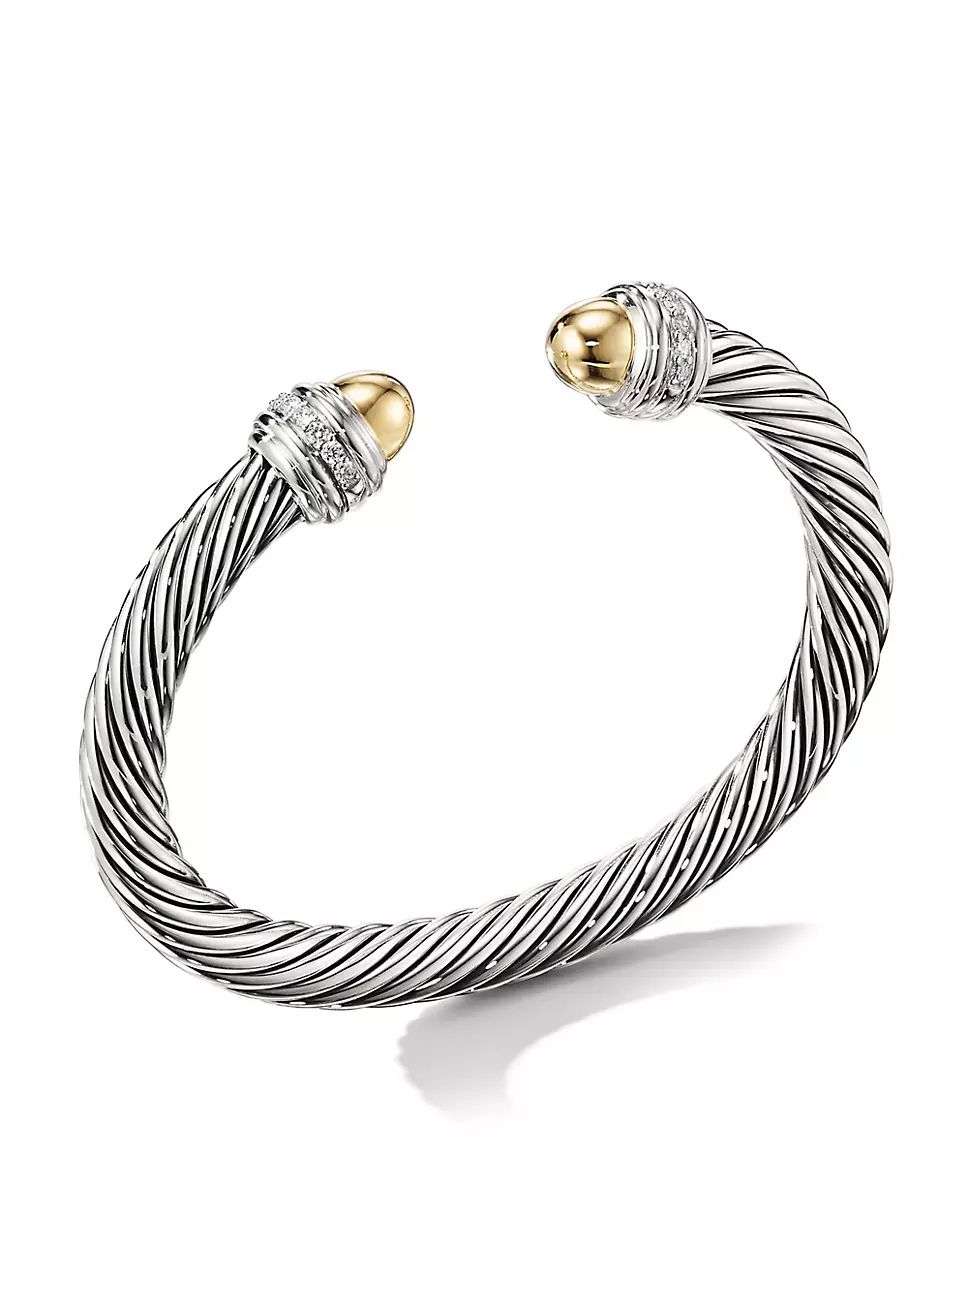 Cable Bracelet With 14K Gold & Diamonds | Saks Fifth Avenue